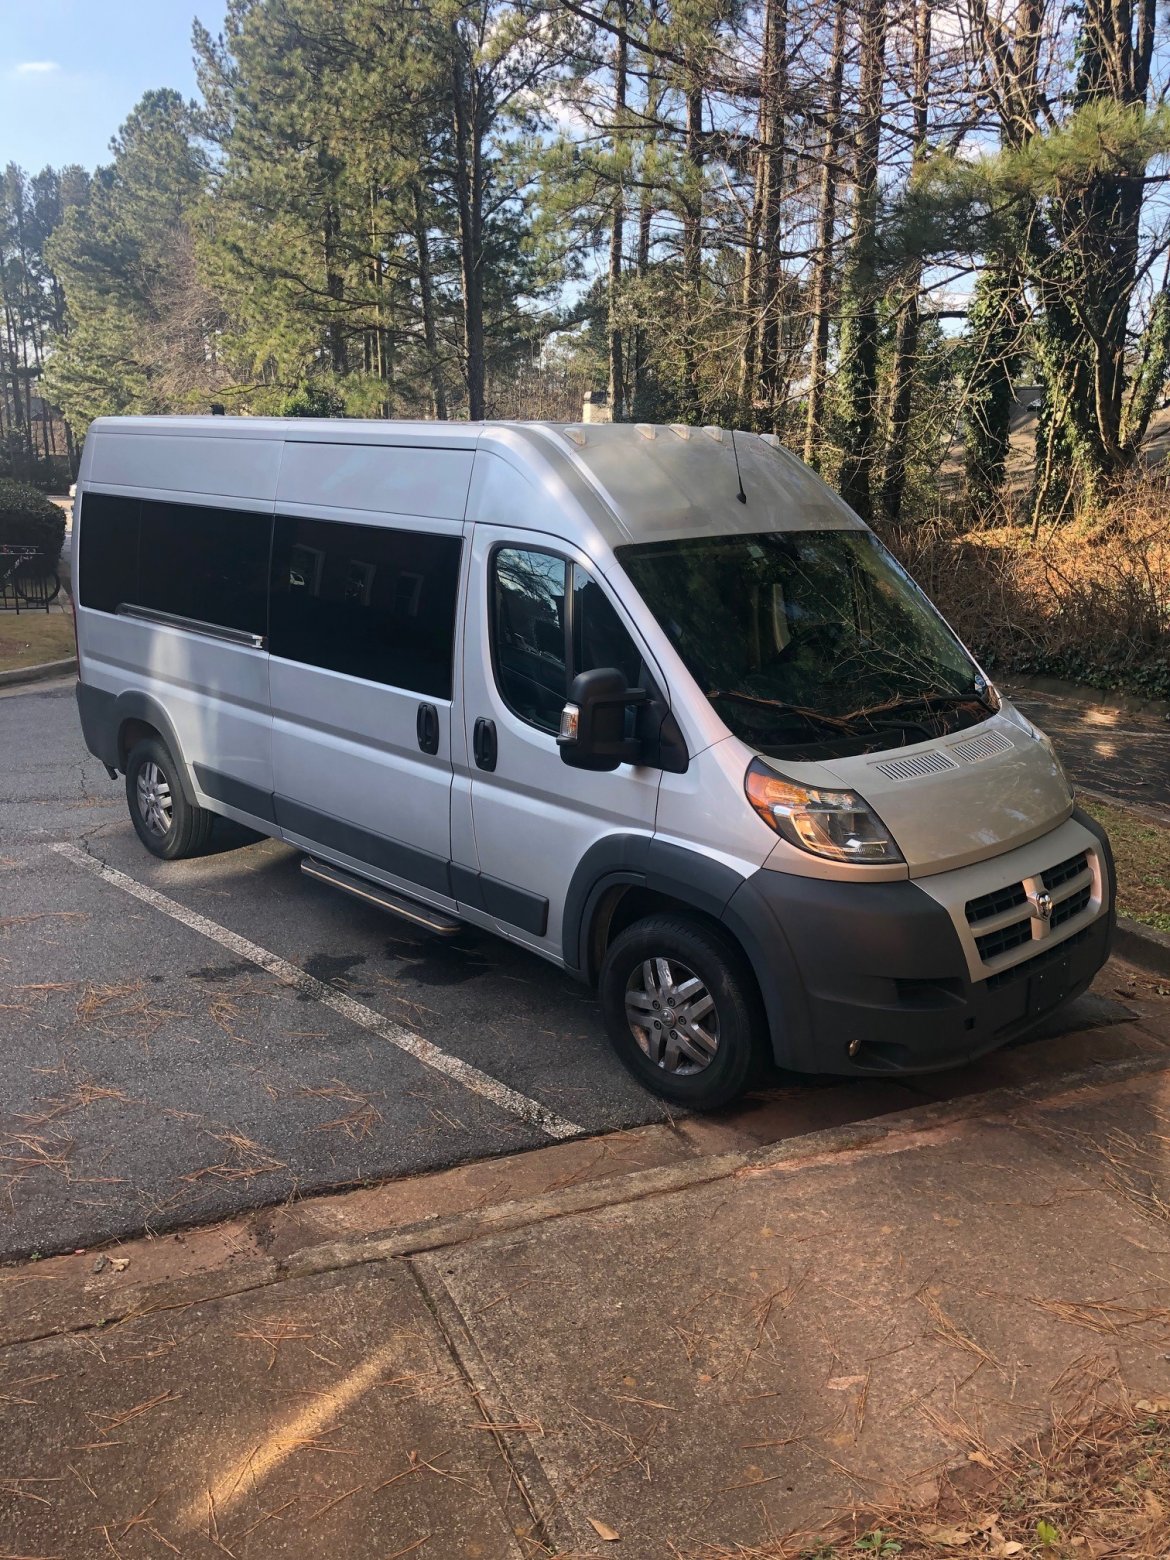 mobile office vans for sale